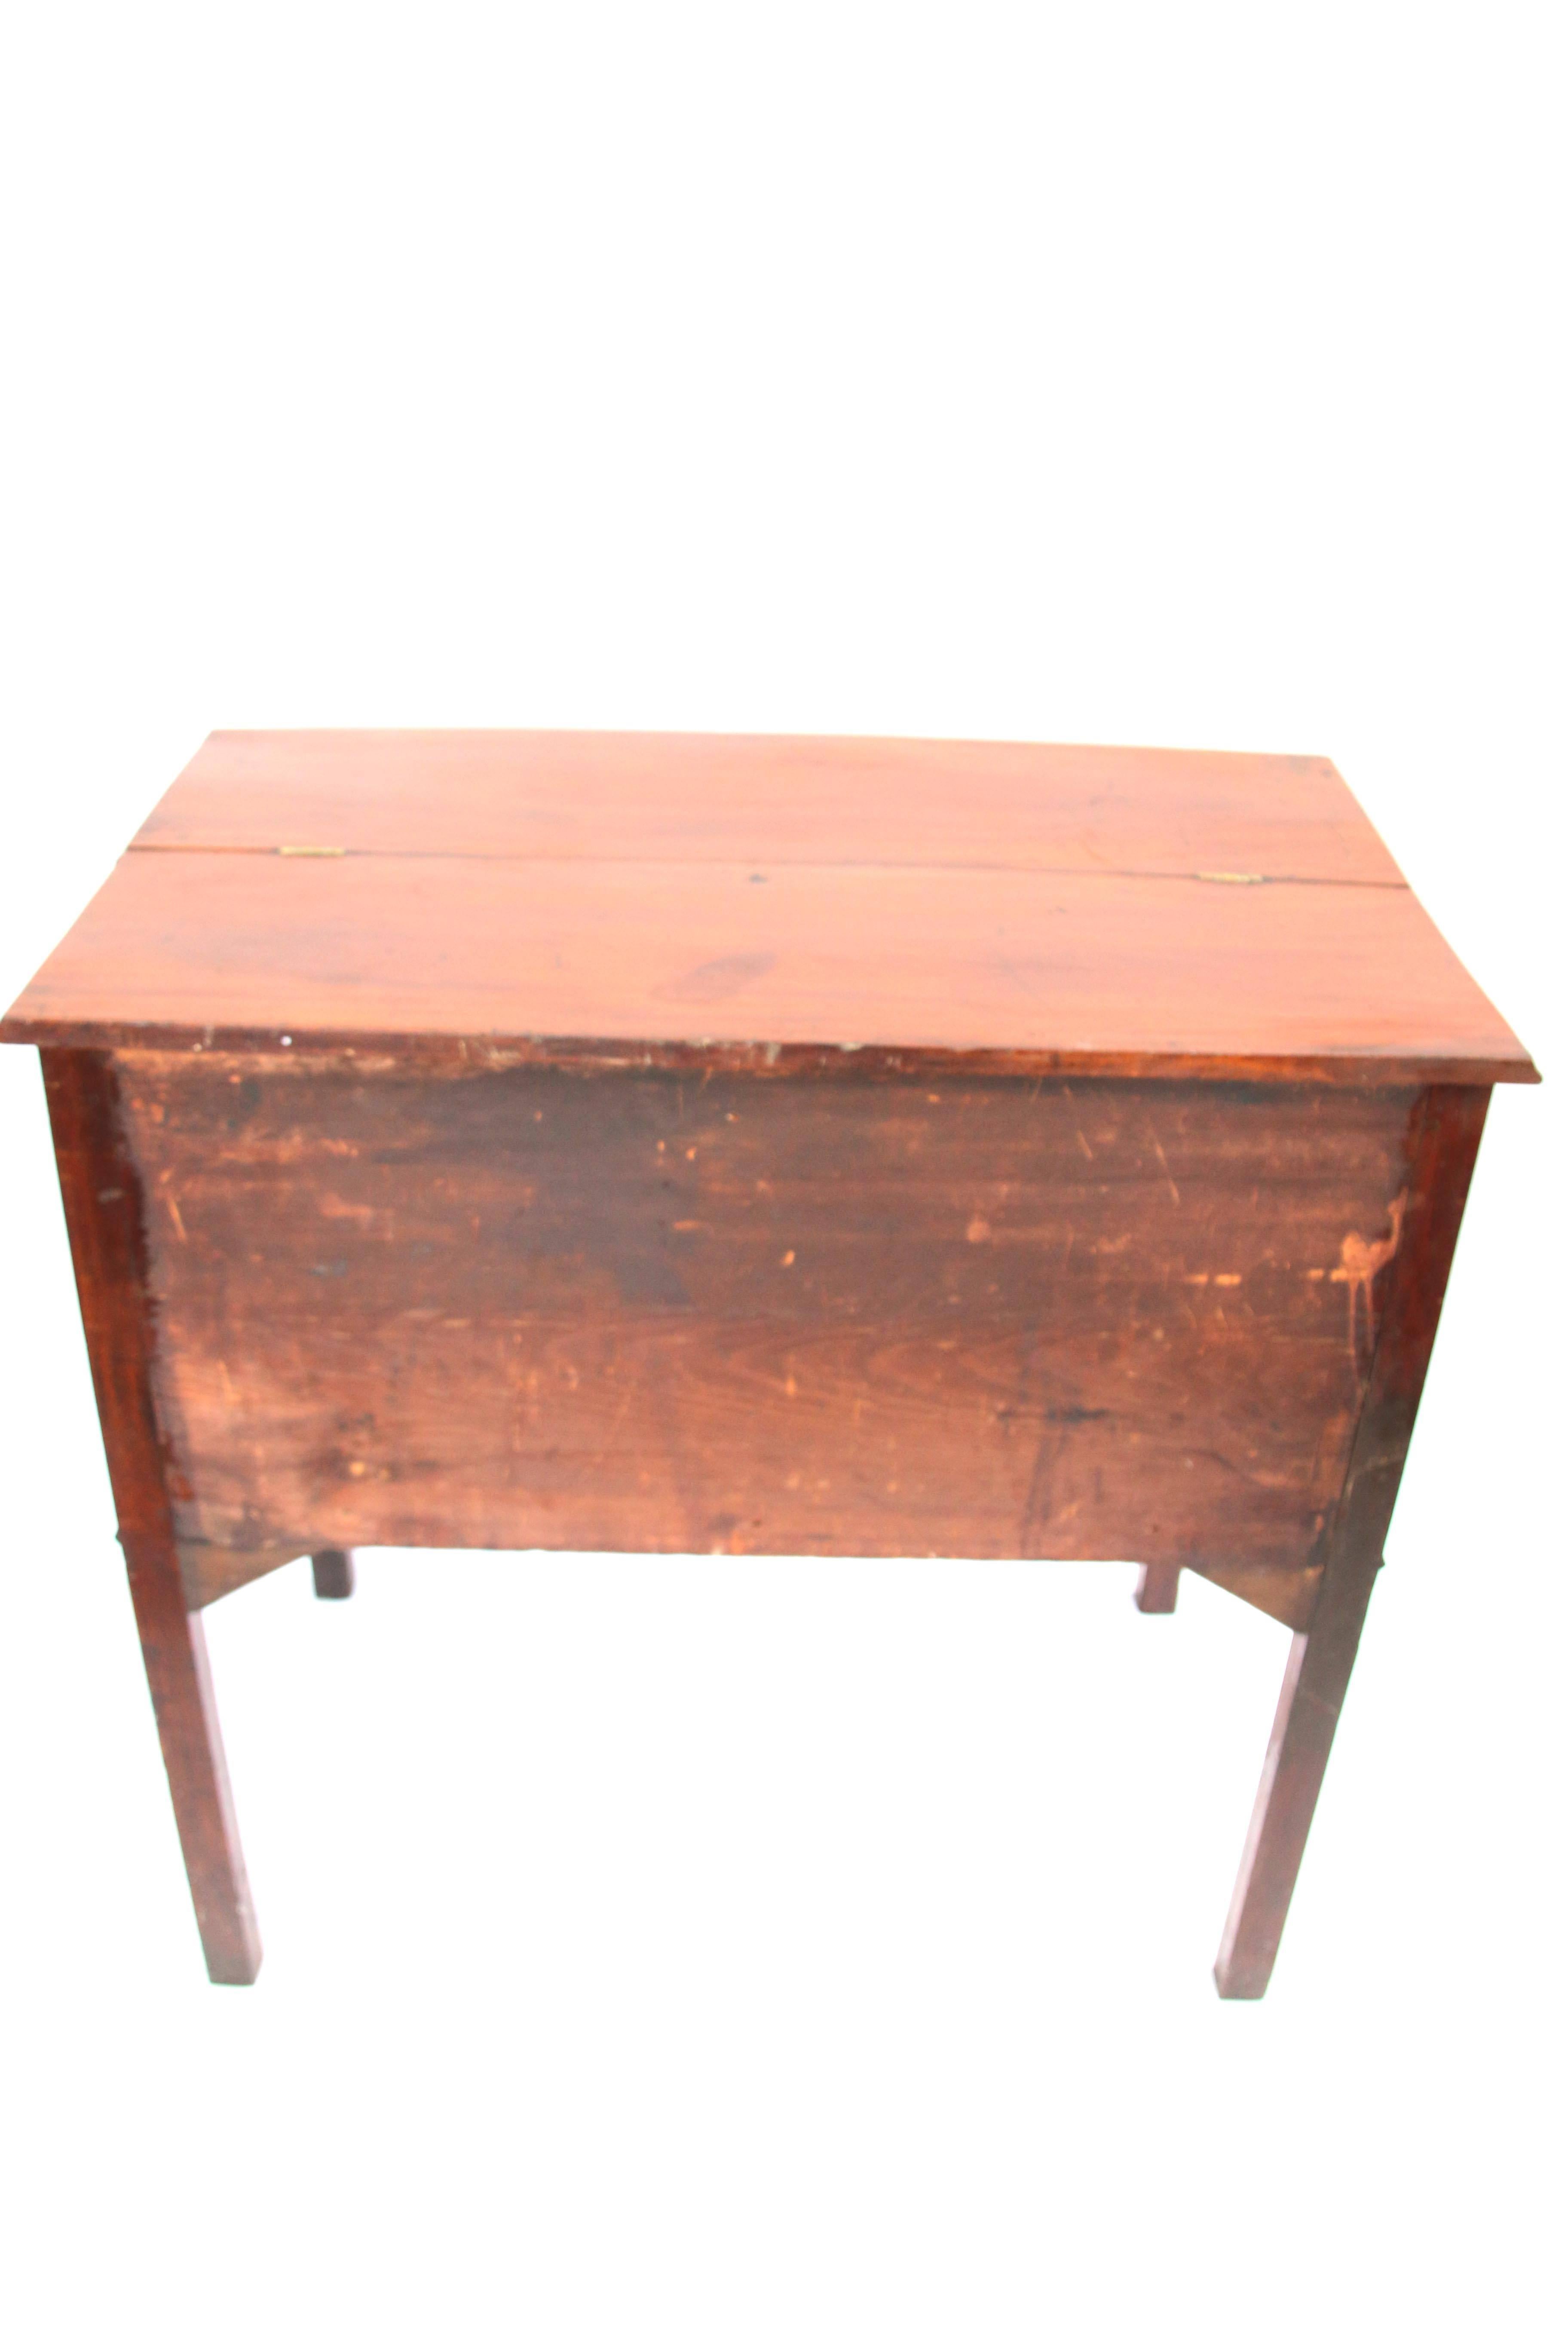 Rare Form Rhode Island Chippendale Mahogany Desk For Sale 5